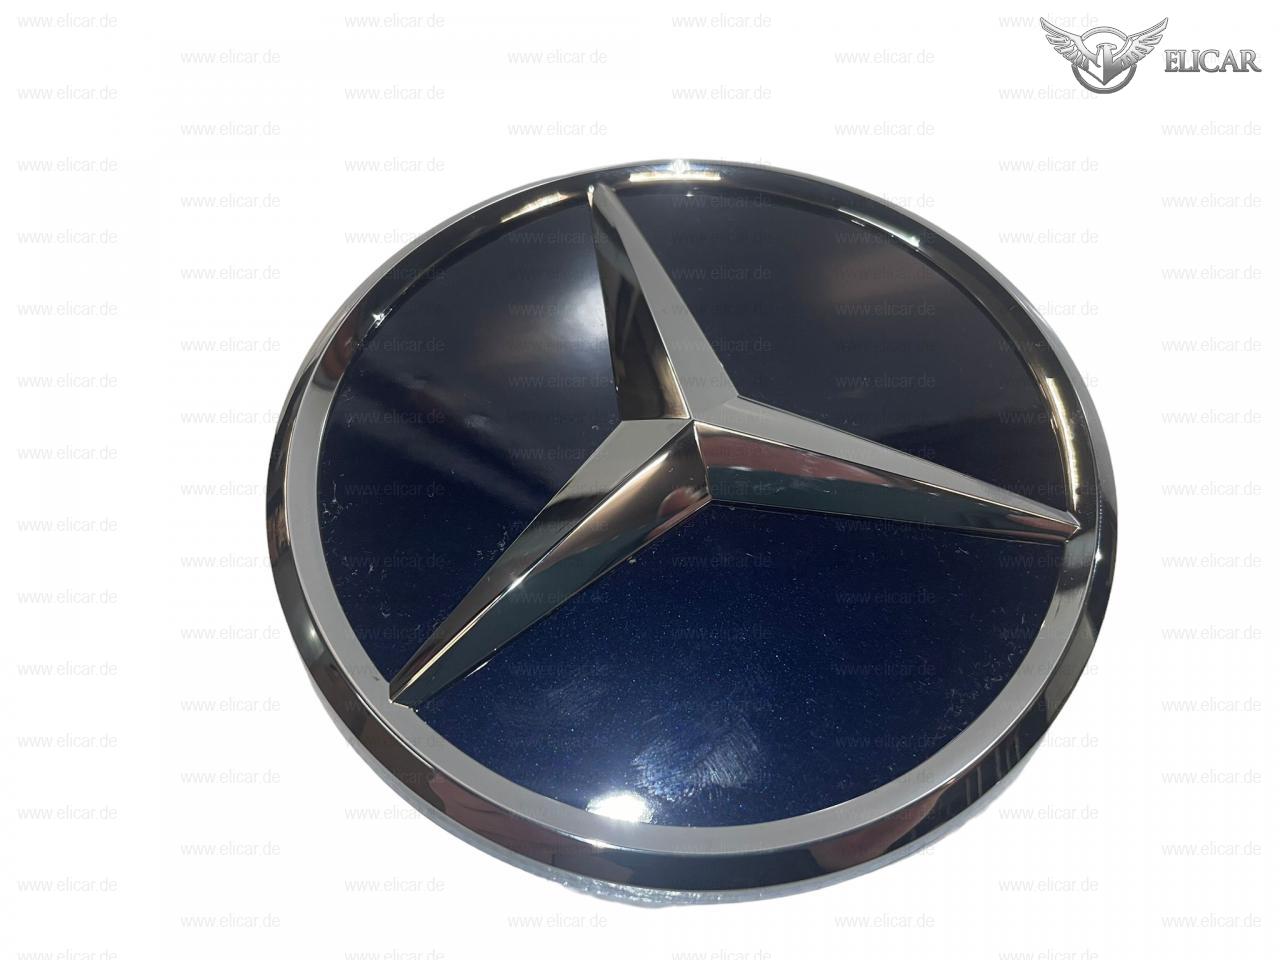 Stern Rückwandtür  e tr für Mercedes-Benz 